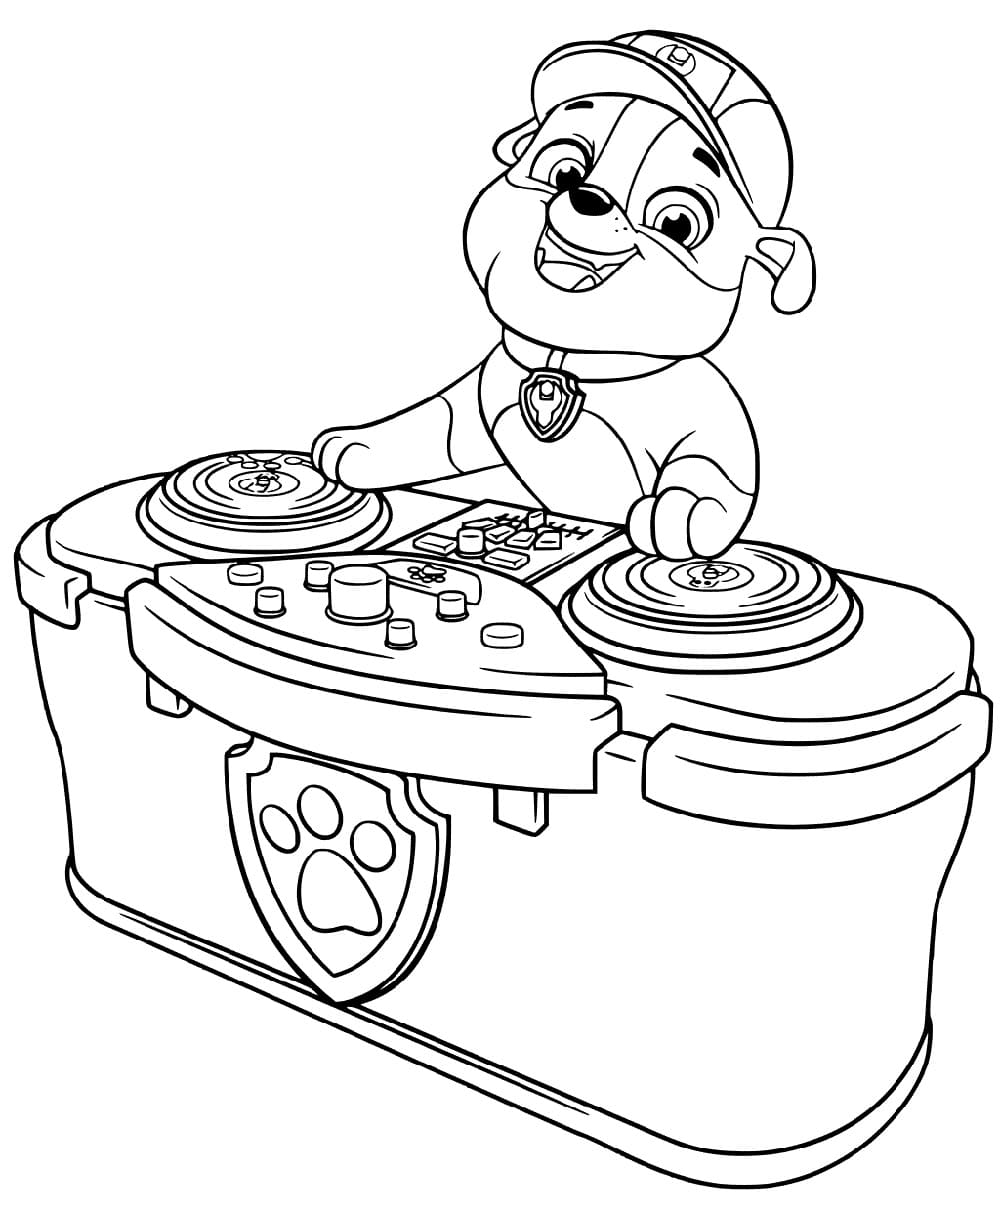 DJ Ruben coloring page